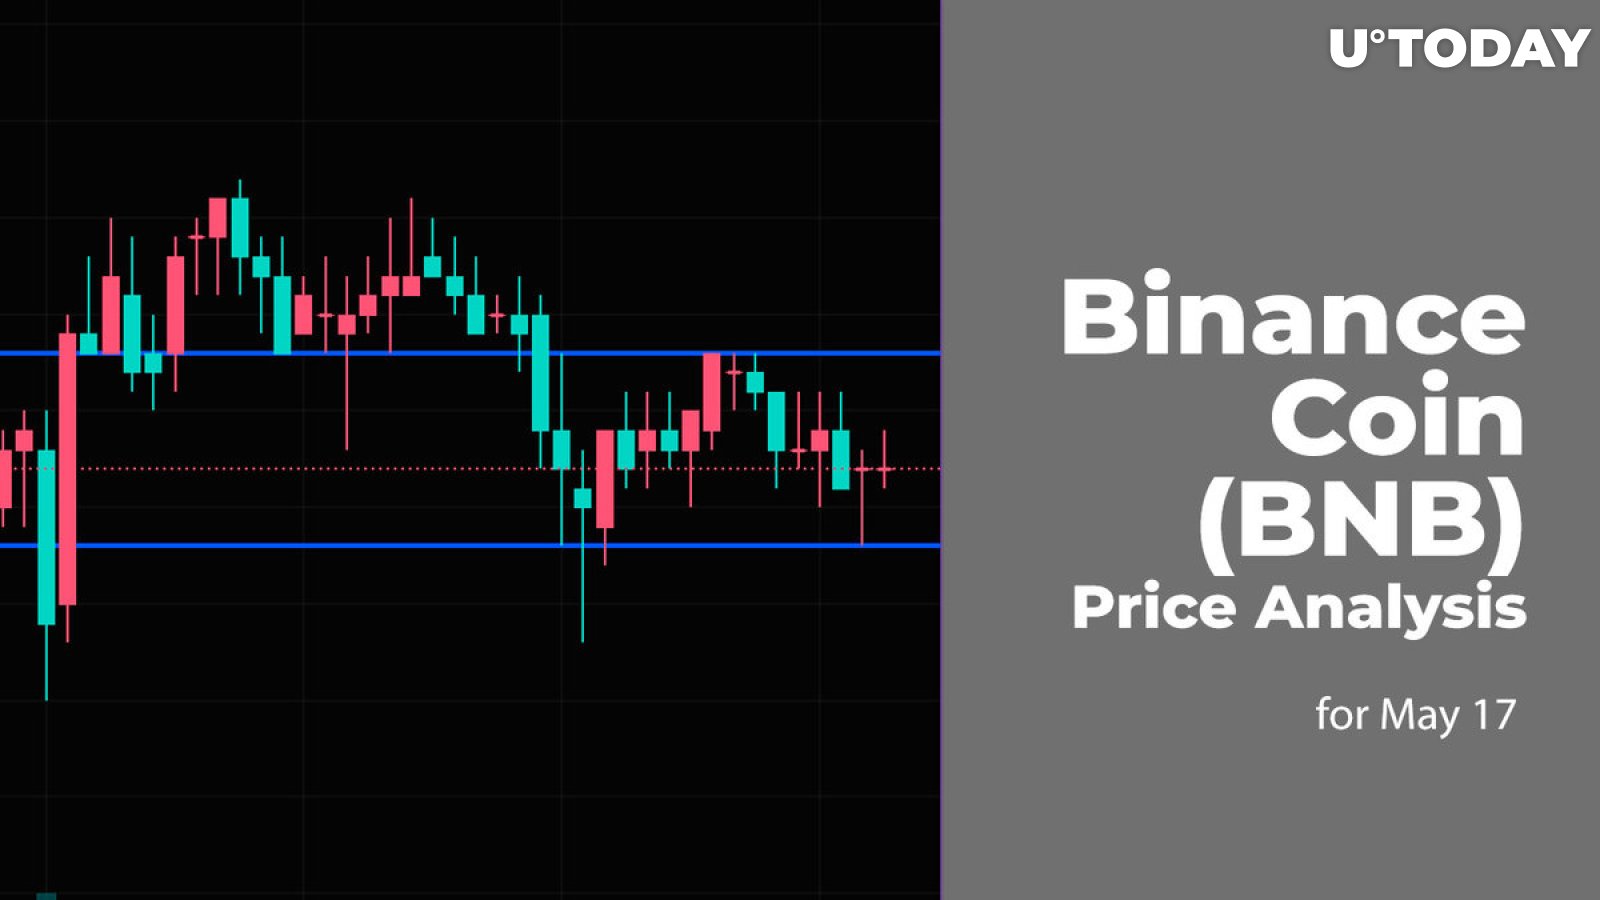 Binance Coin (BNB) Price Analysis for May 17